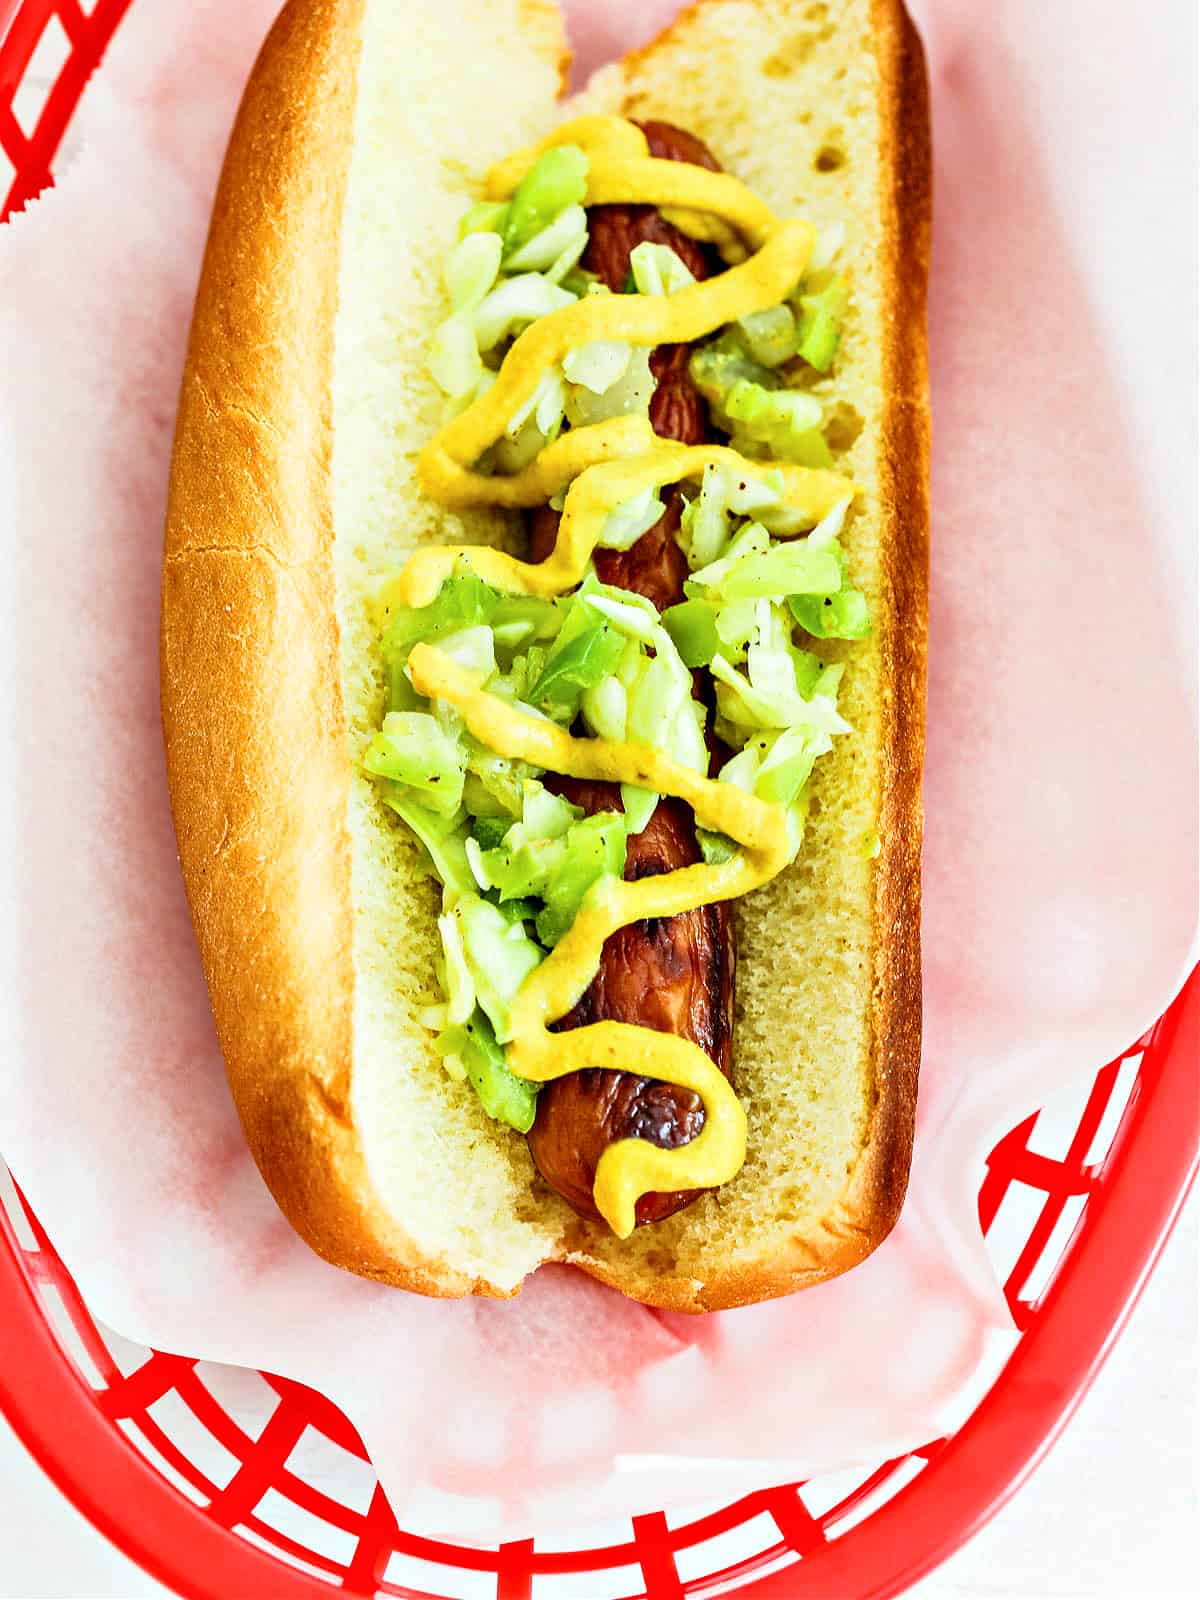 Homemade Hot Dog Relish Recipe